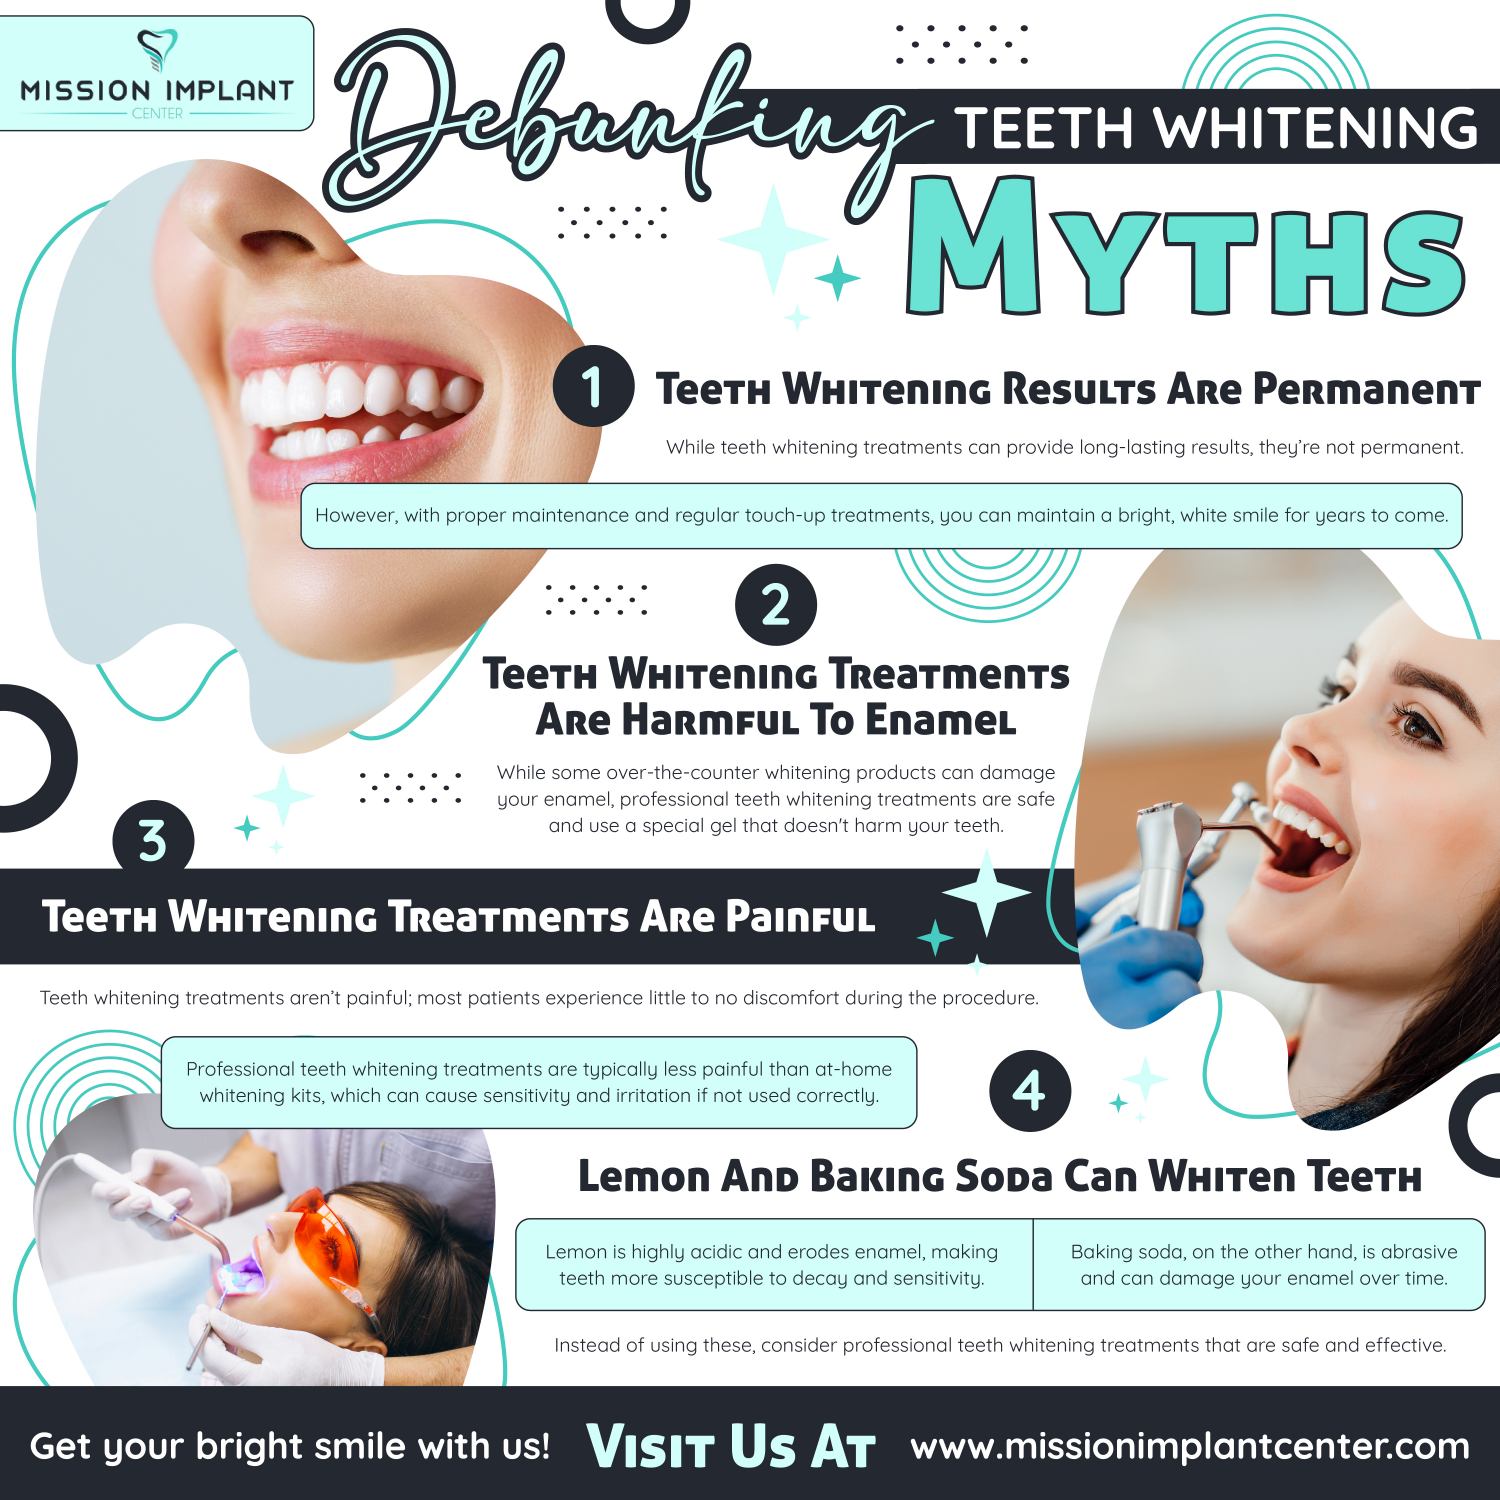 Debunking Teeth Whitening Myths